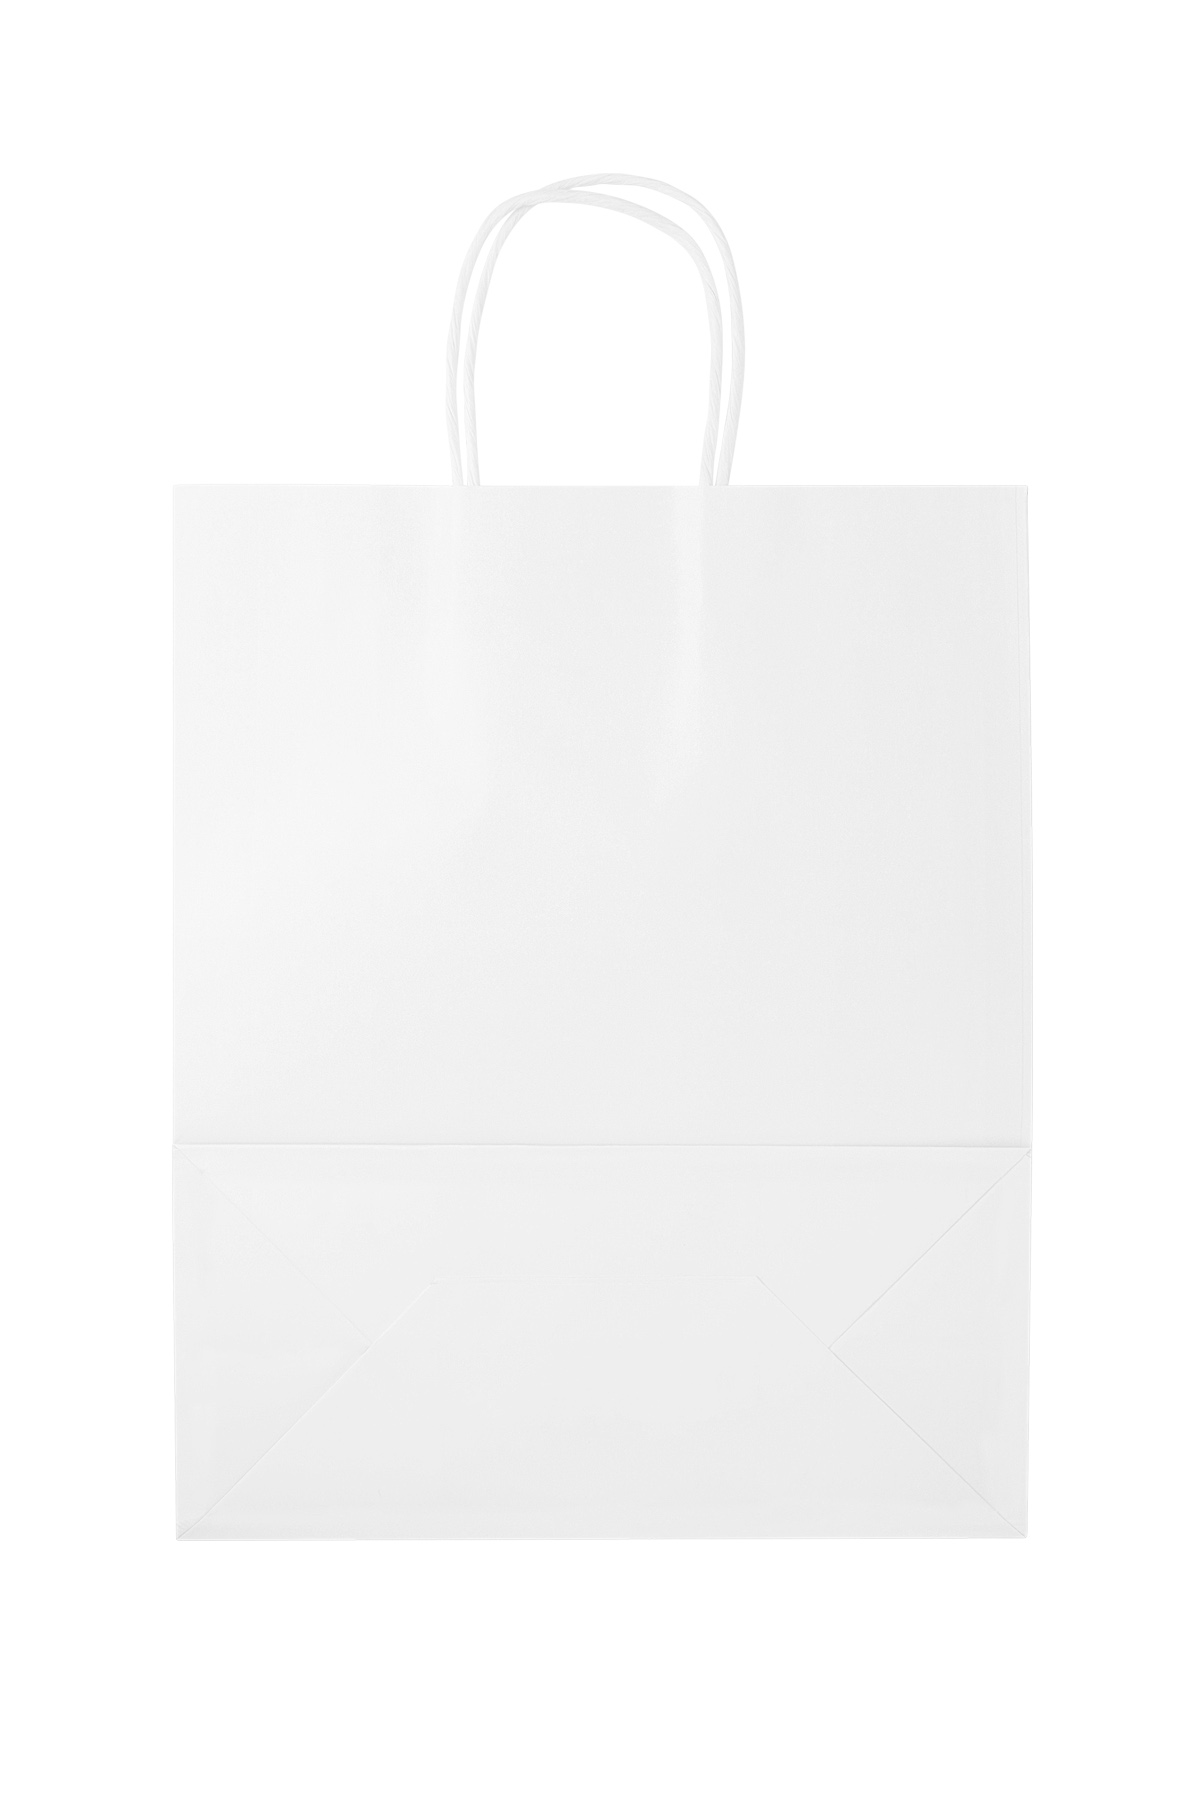 Bags plain 50 pieces large - white Paper Picture2